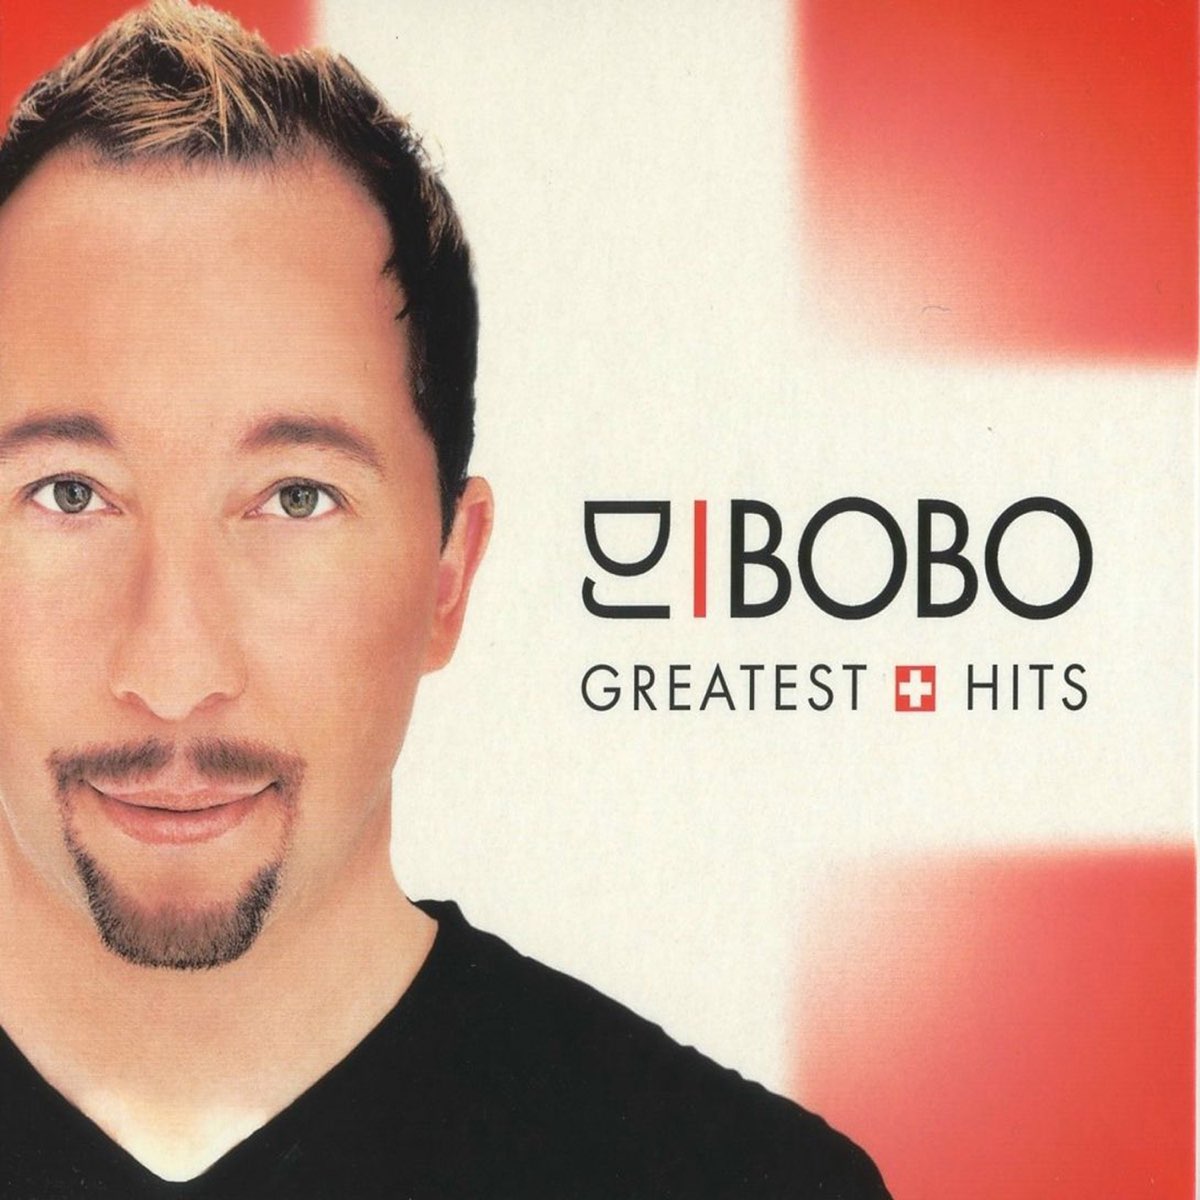 Слушать бобо 90. DJ Bobo обложка. DJ Bobo "Greatest Hits". DJ Bobo Постер. Дж бобо фото.